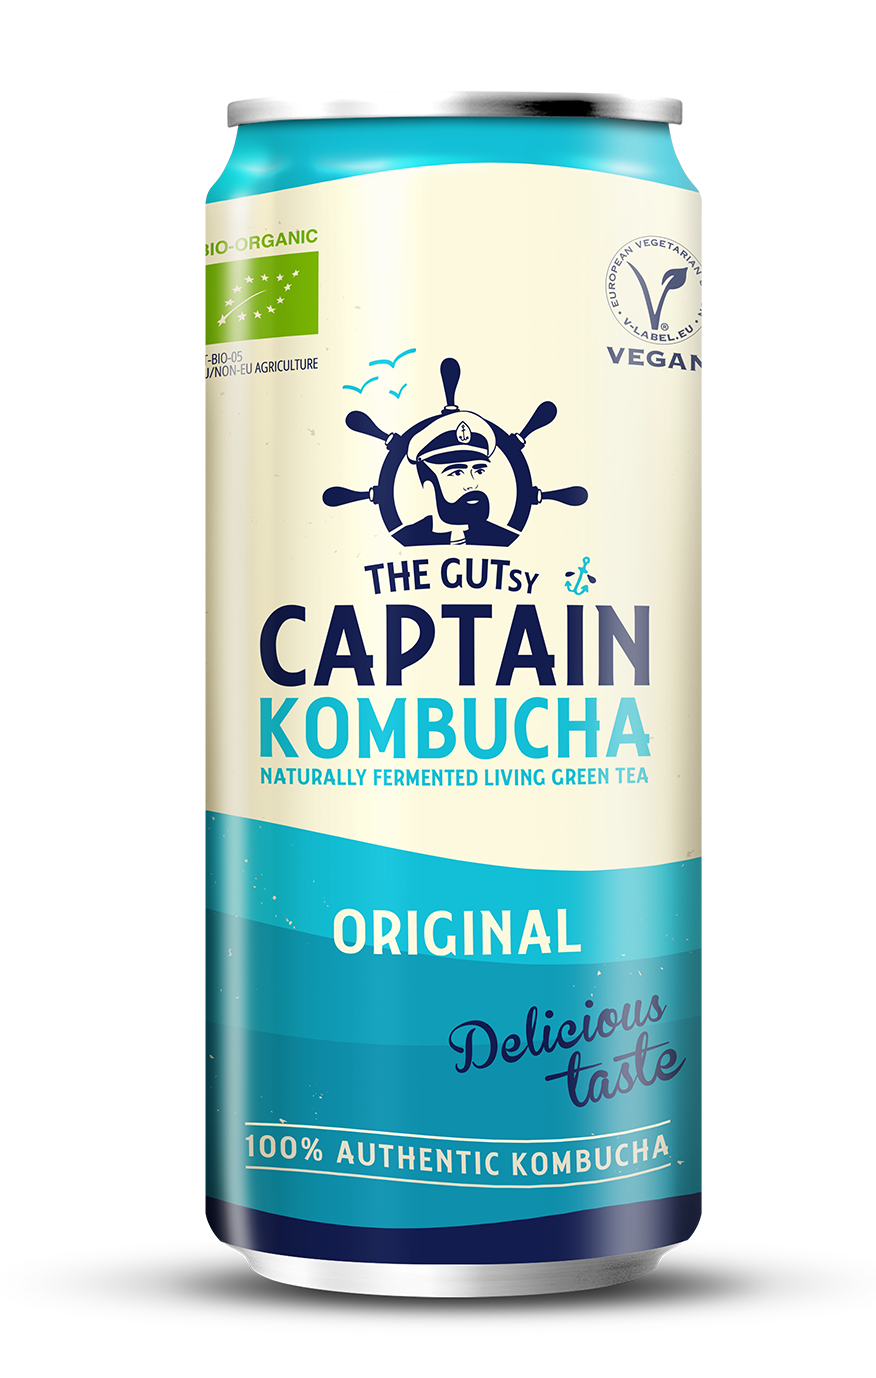 The Gutsy Captain Kombucha Original BIO